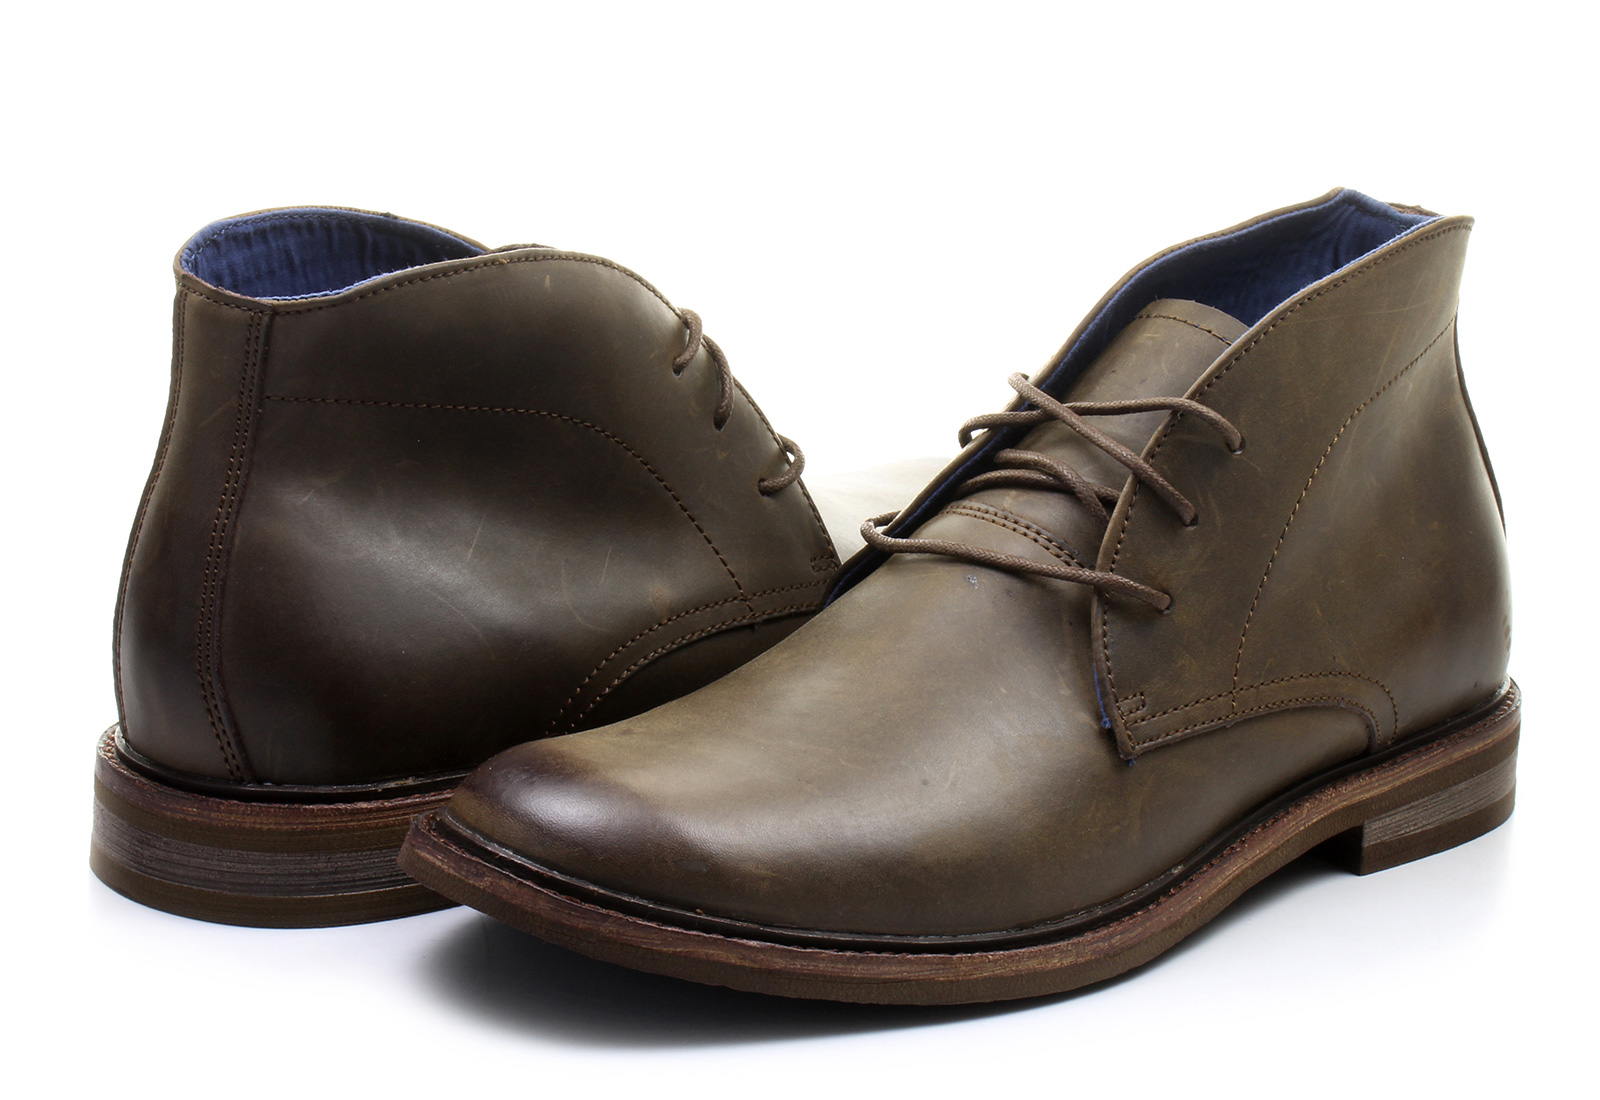 Skechers Shoes - Wellington - 68016-dkbr - Online shop for sneakers ...